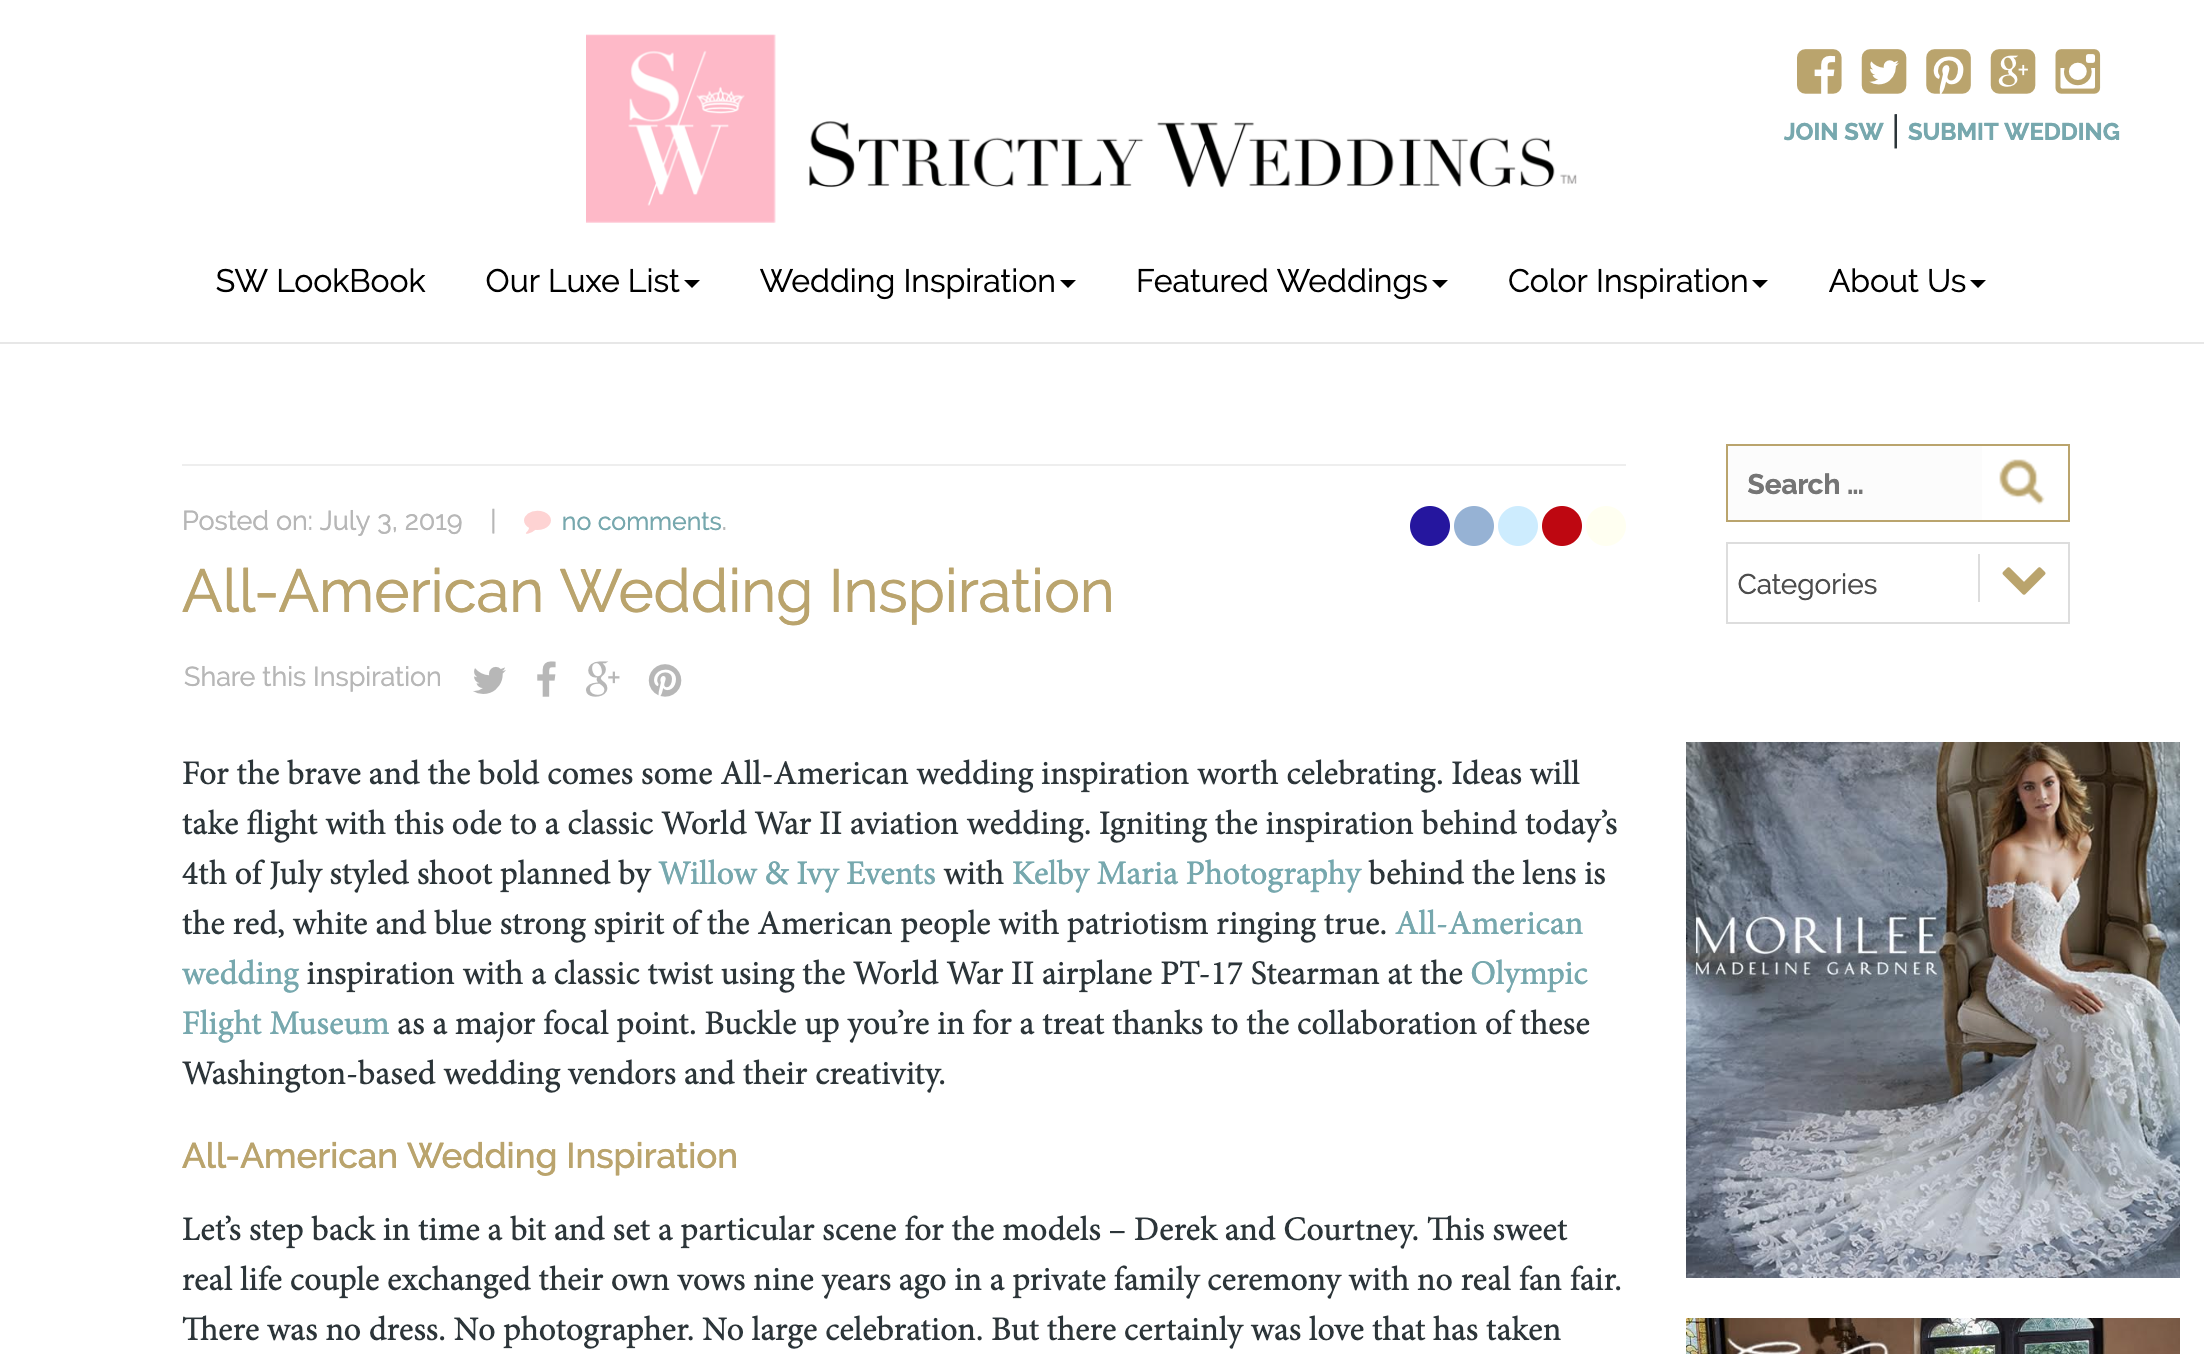 All-American Wedding Inspiration On Strictly Weddings